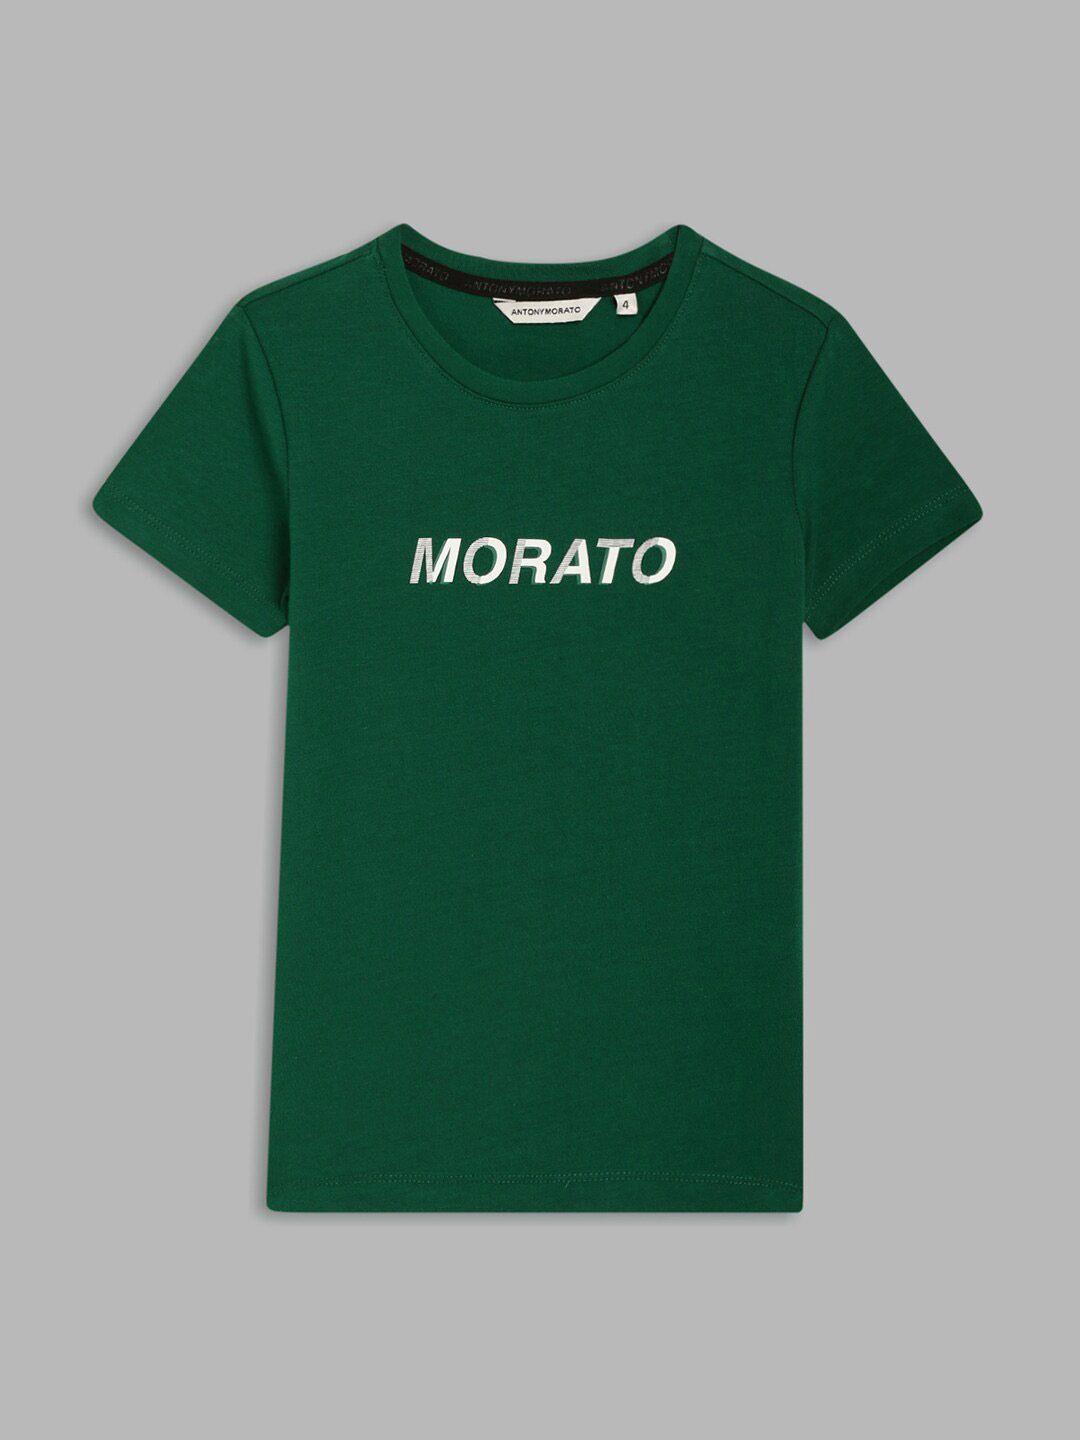 antony-morato-boys-green-&-white-typography-cotton-printed-t-shirt